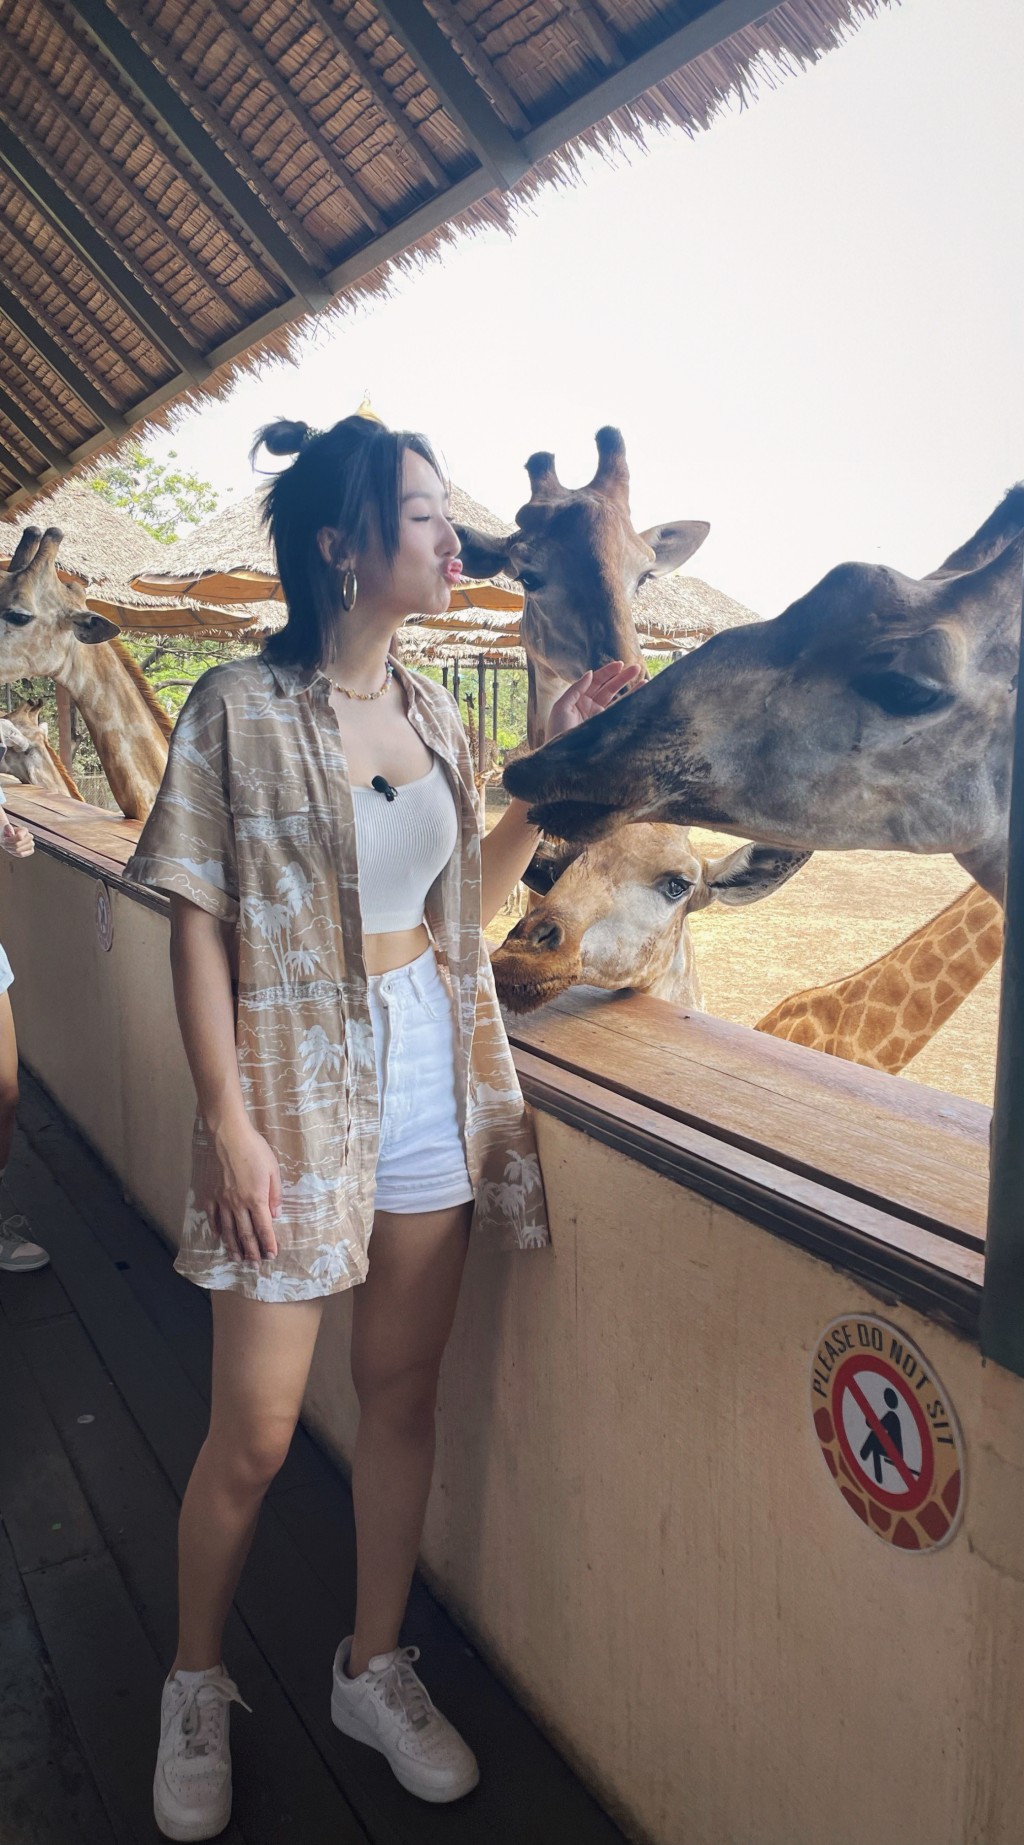 高 Ling 大讚曼谷 Safari World 的長頸鹿平易近人。